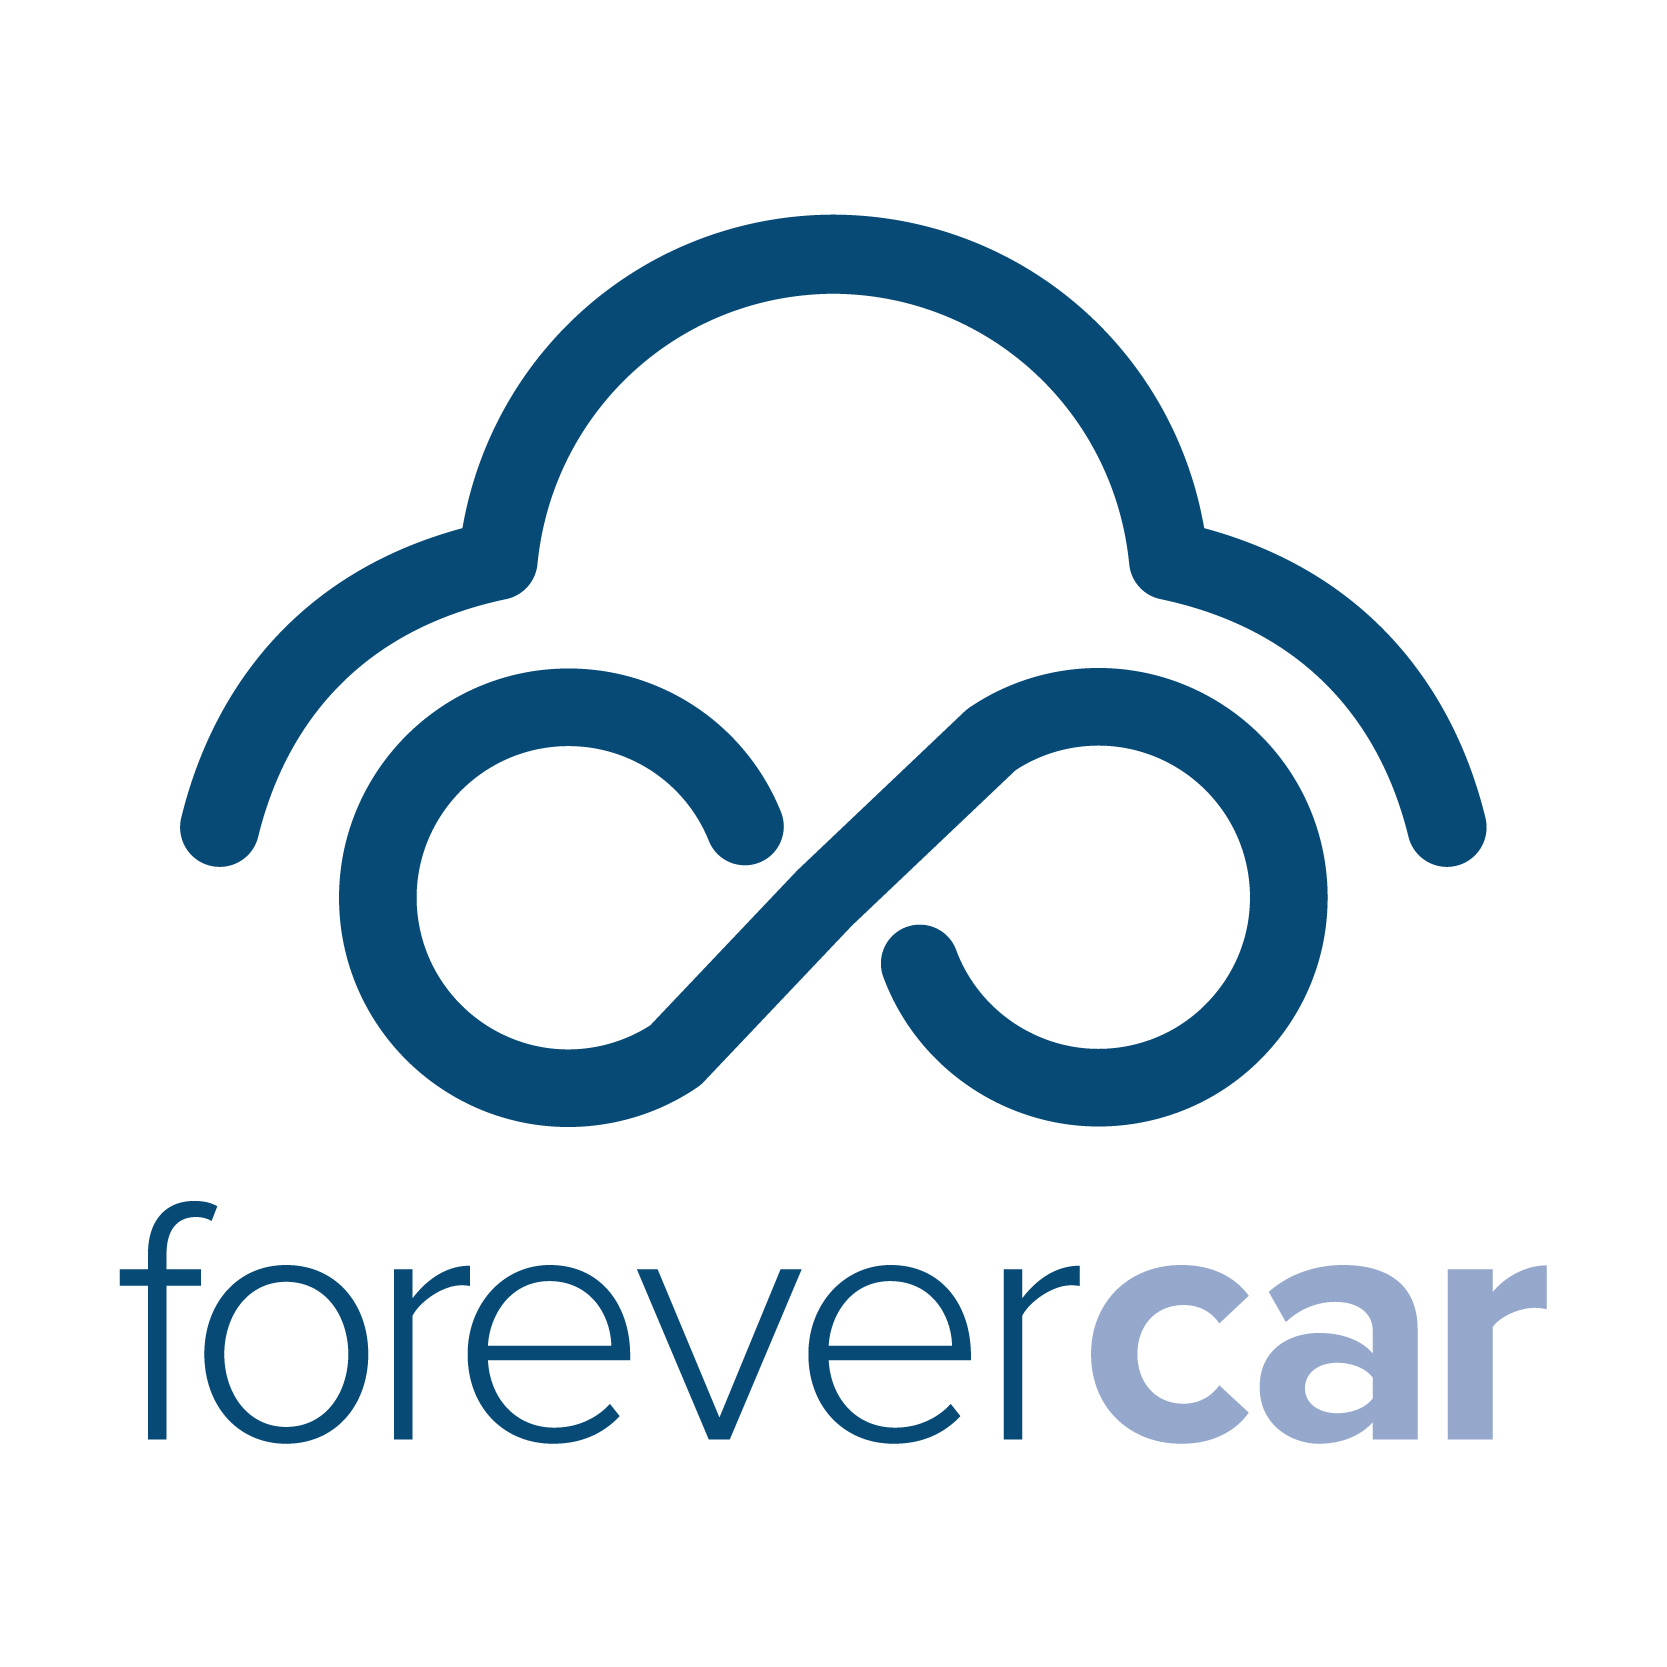 Forever Car Logo - Benefits. ForeverCar Vehicle Service Plans